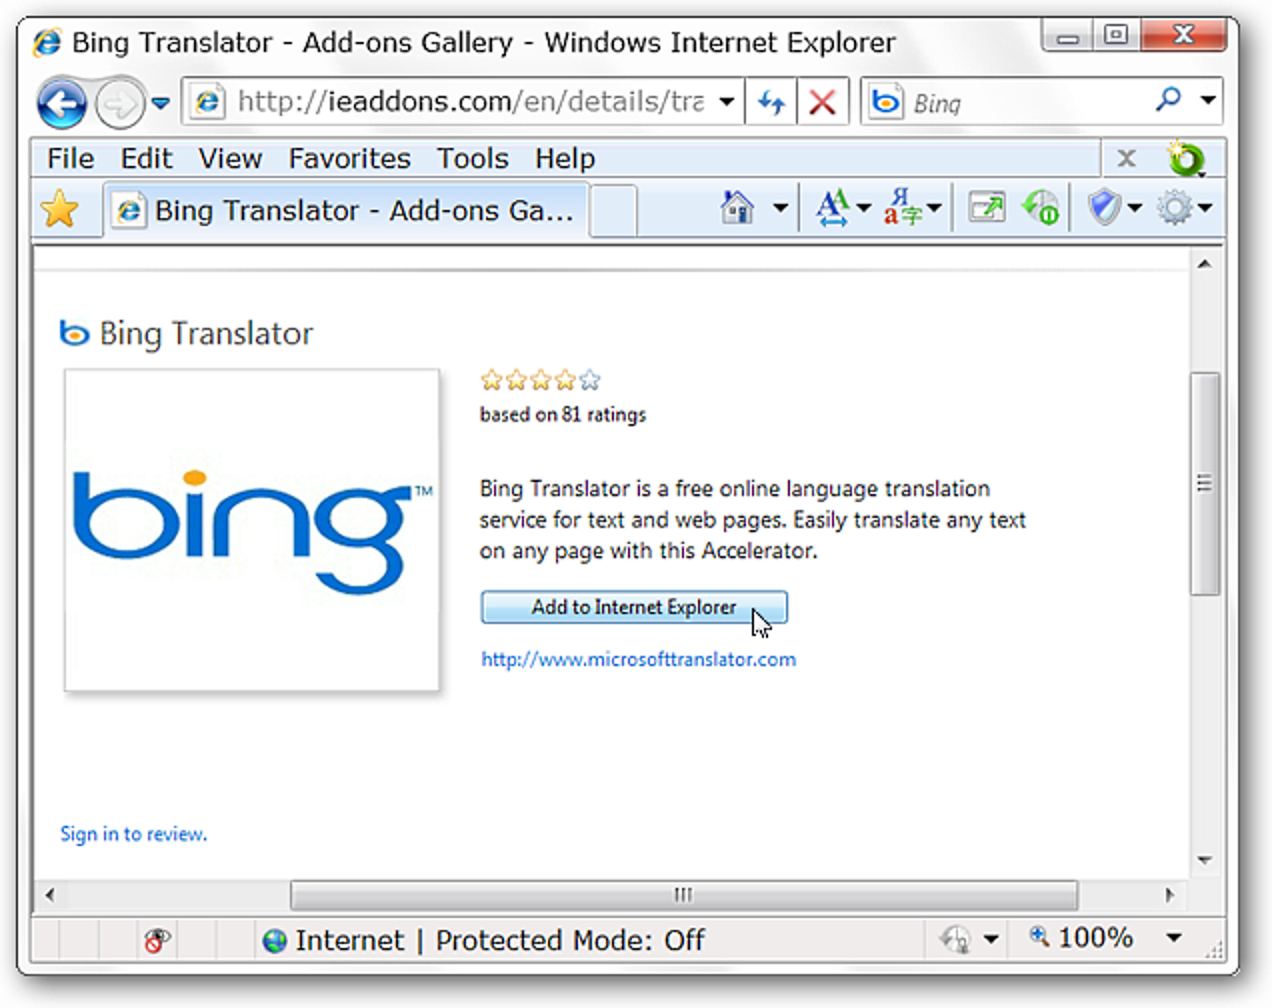 Traduire des langues dans IE 8 avec Bing Translator